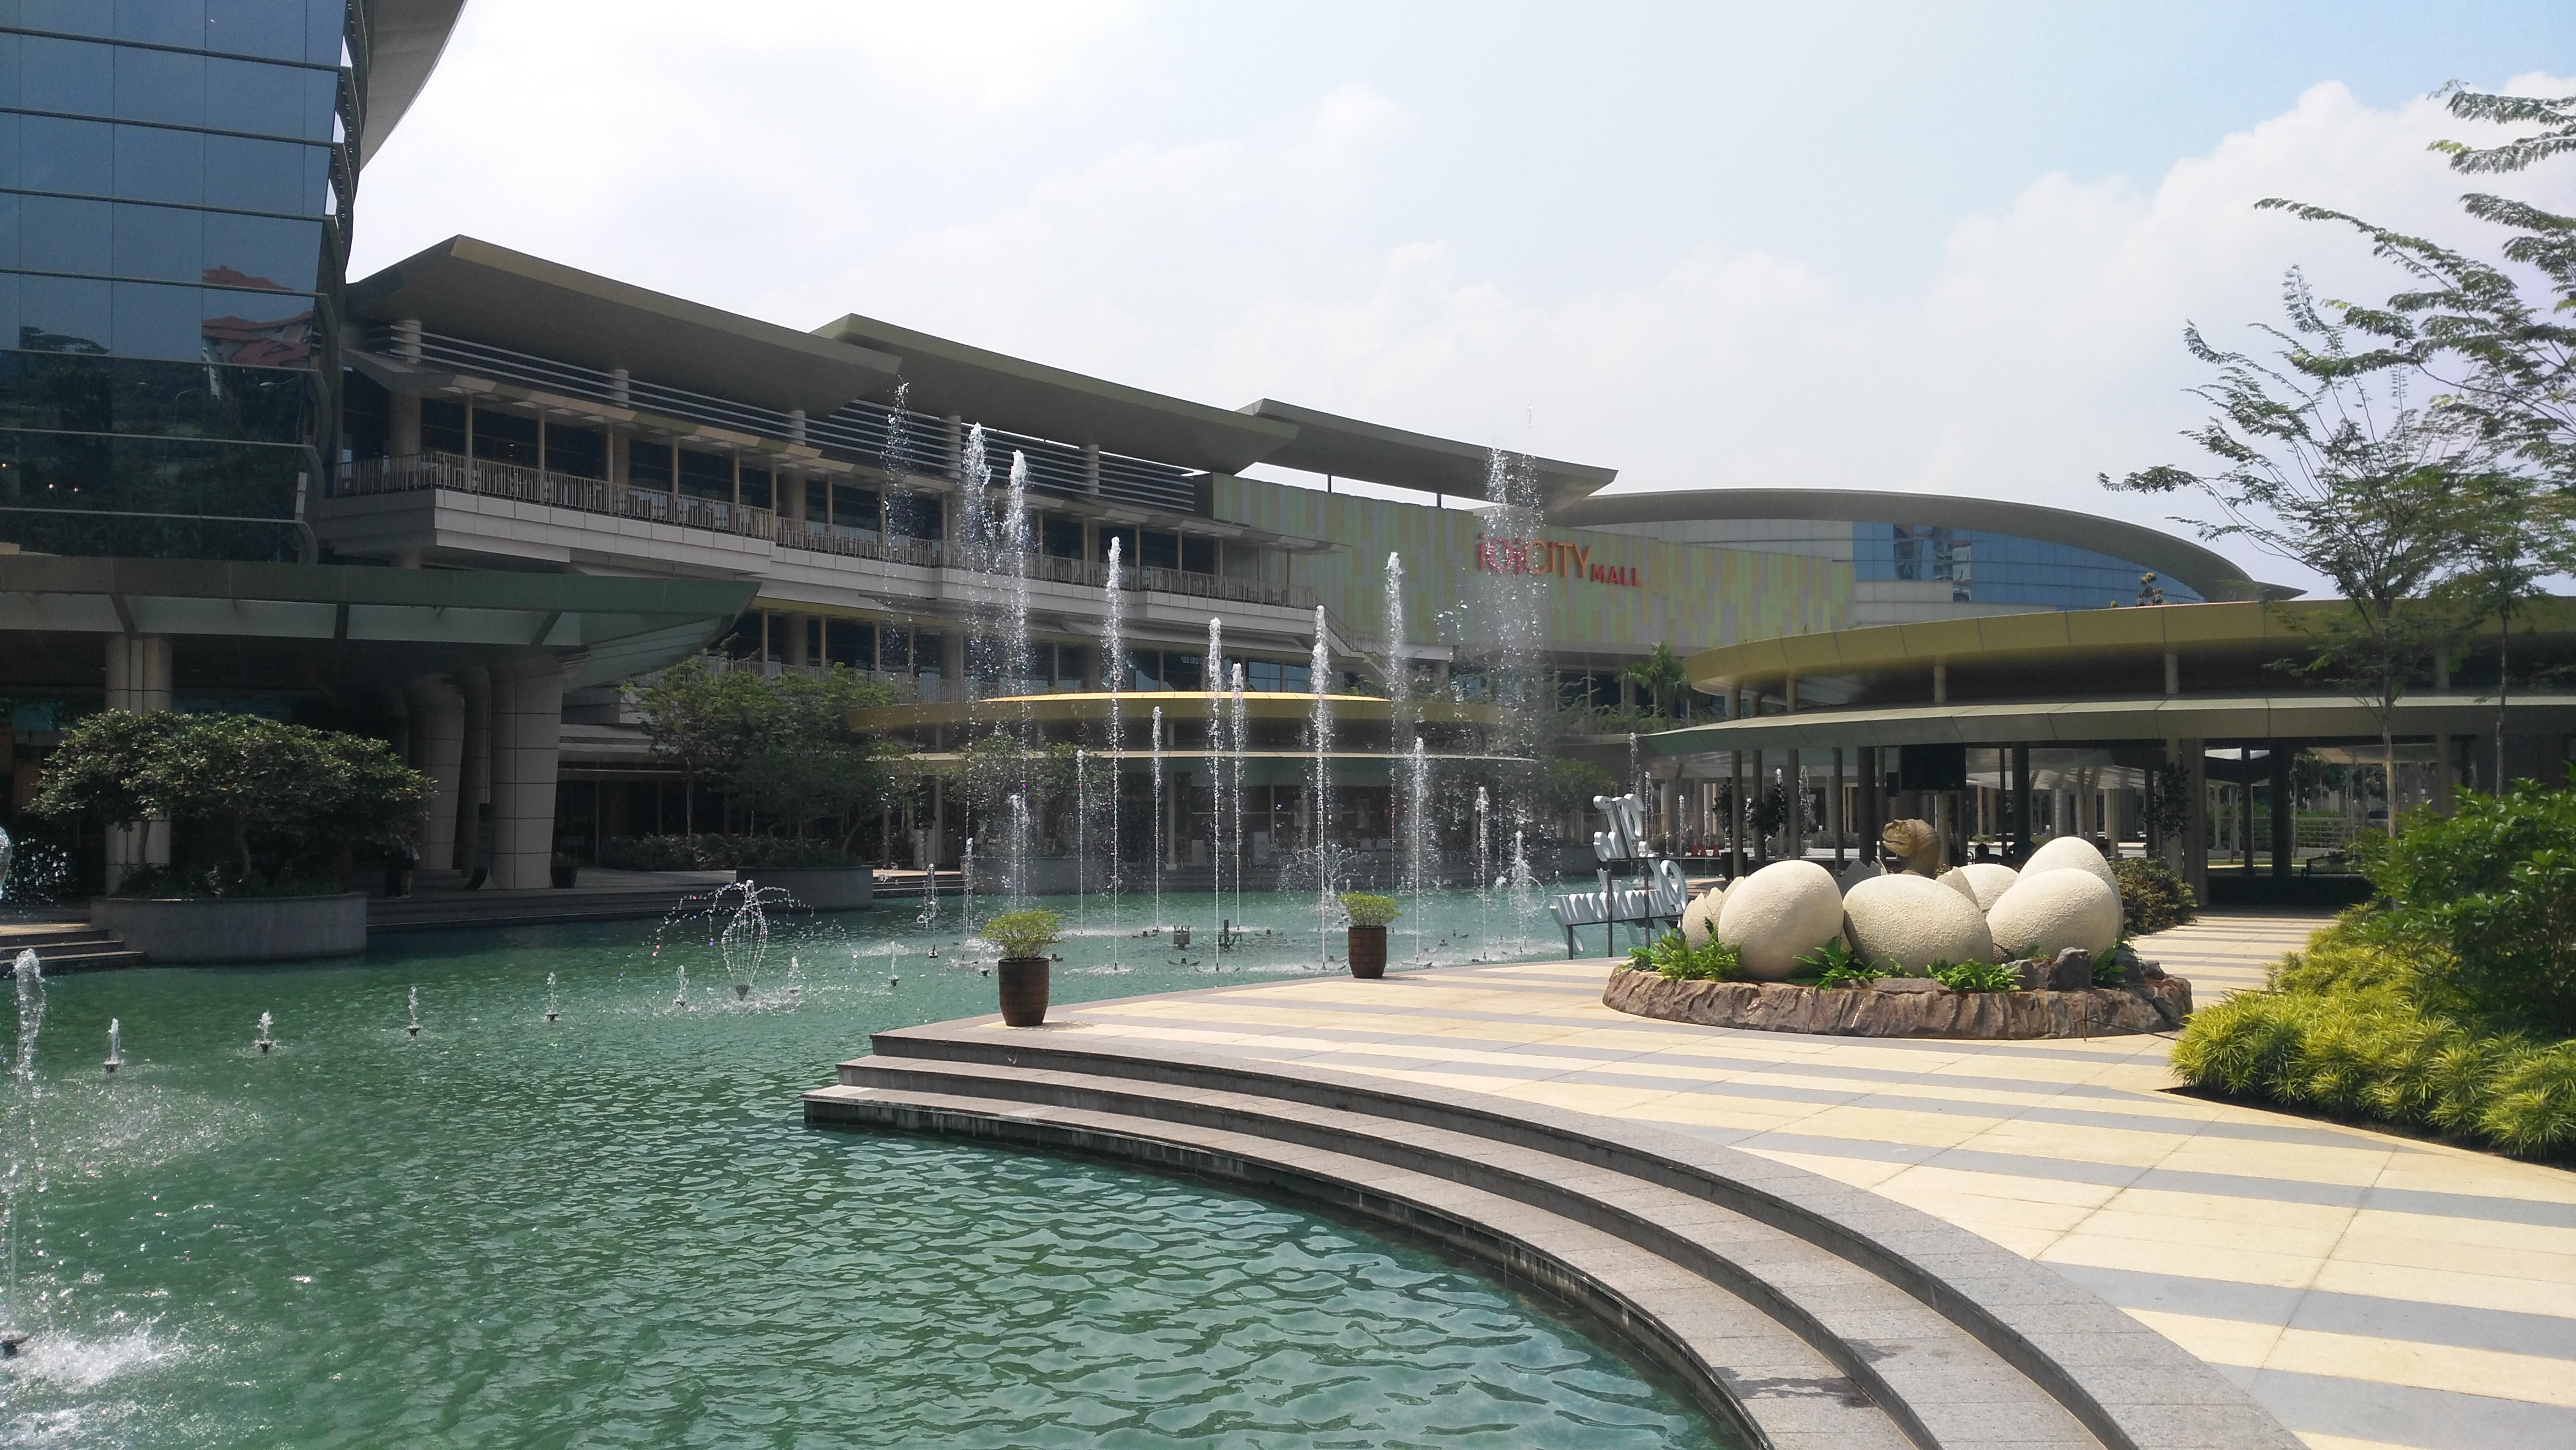 IOI City Mall in Putrajaya